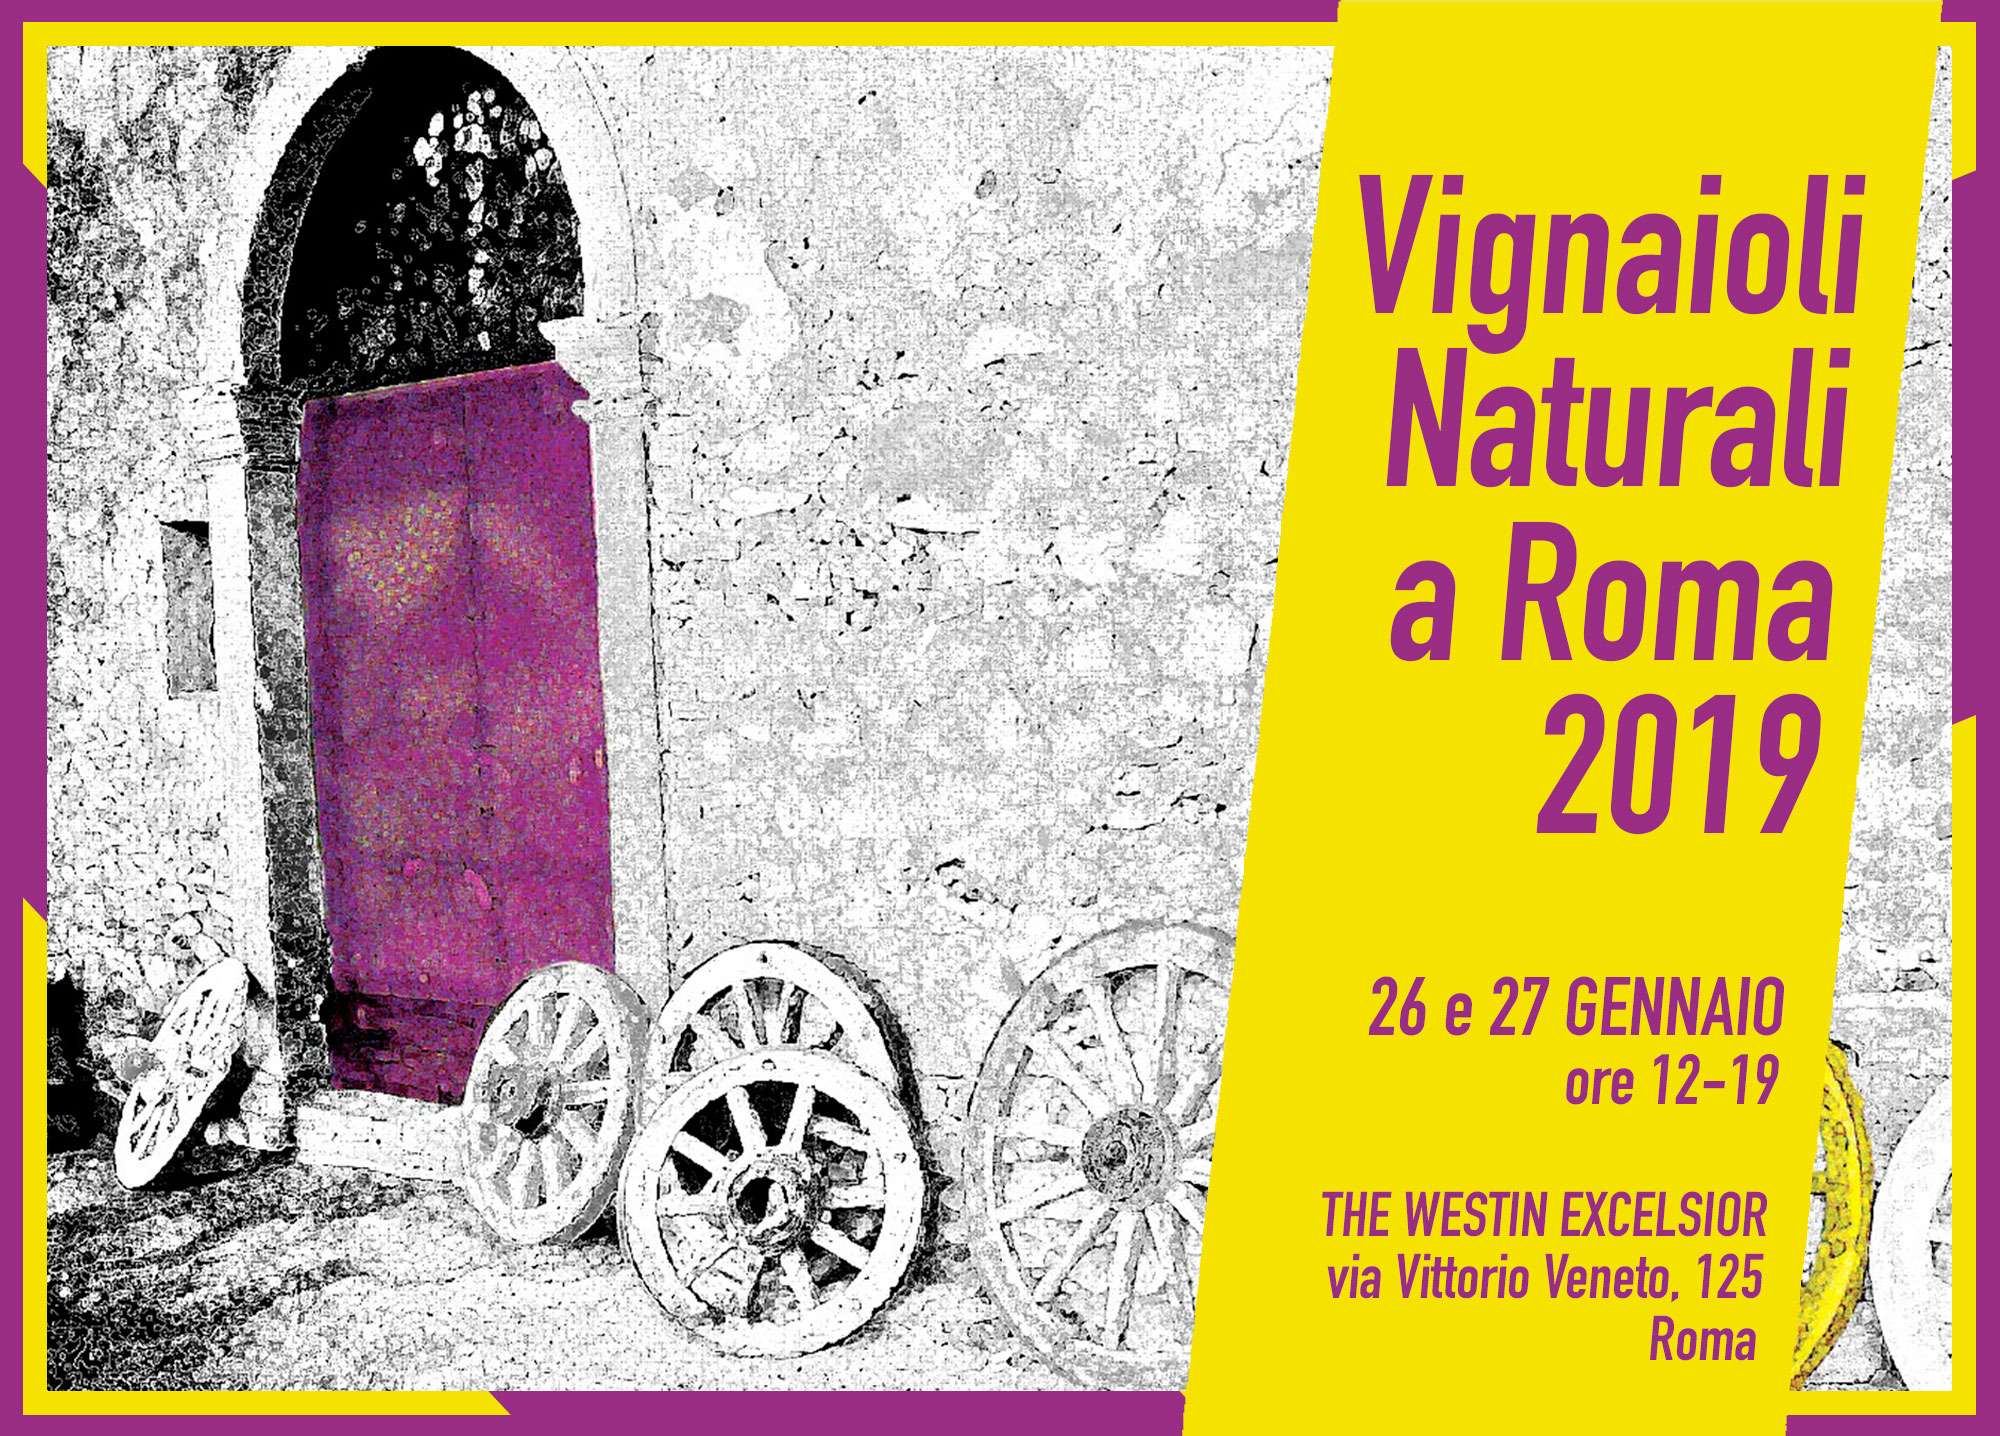 Vignaioli Naturali a Roma 2019